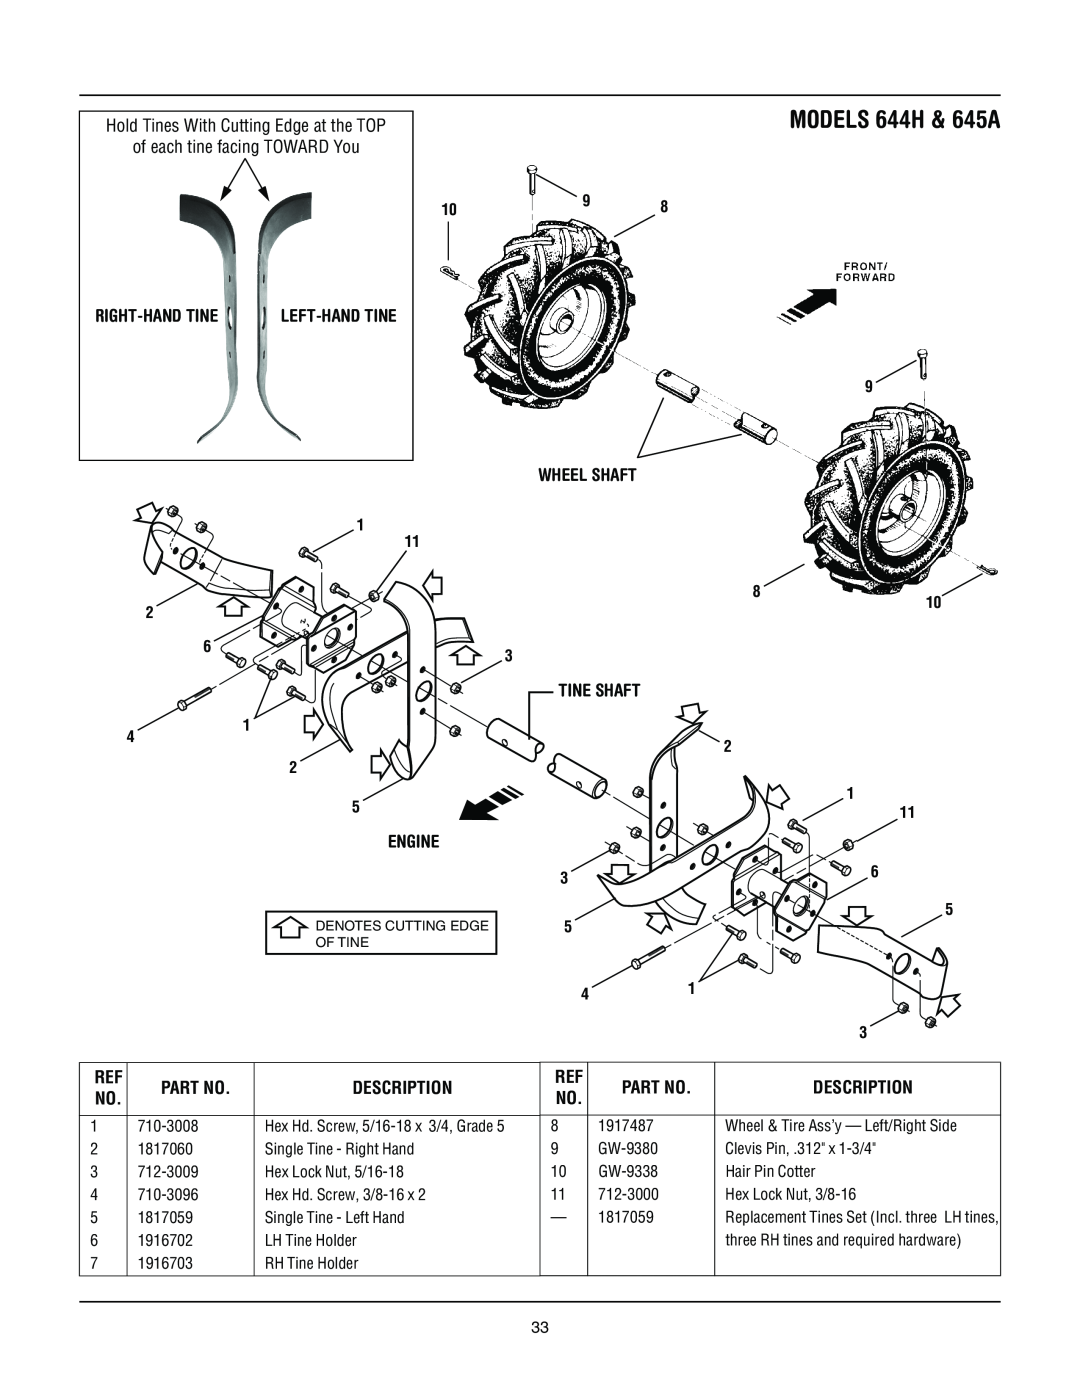 Troy-Bilt 645A-Bronco manual MODELS 644H & 645A, Right-Hand Tine, Wheel Shaft, Tine Shaft, Engine, Description 